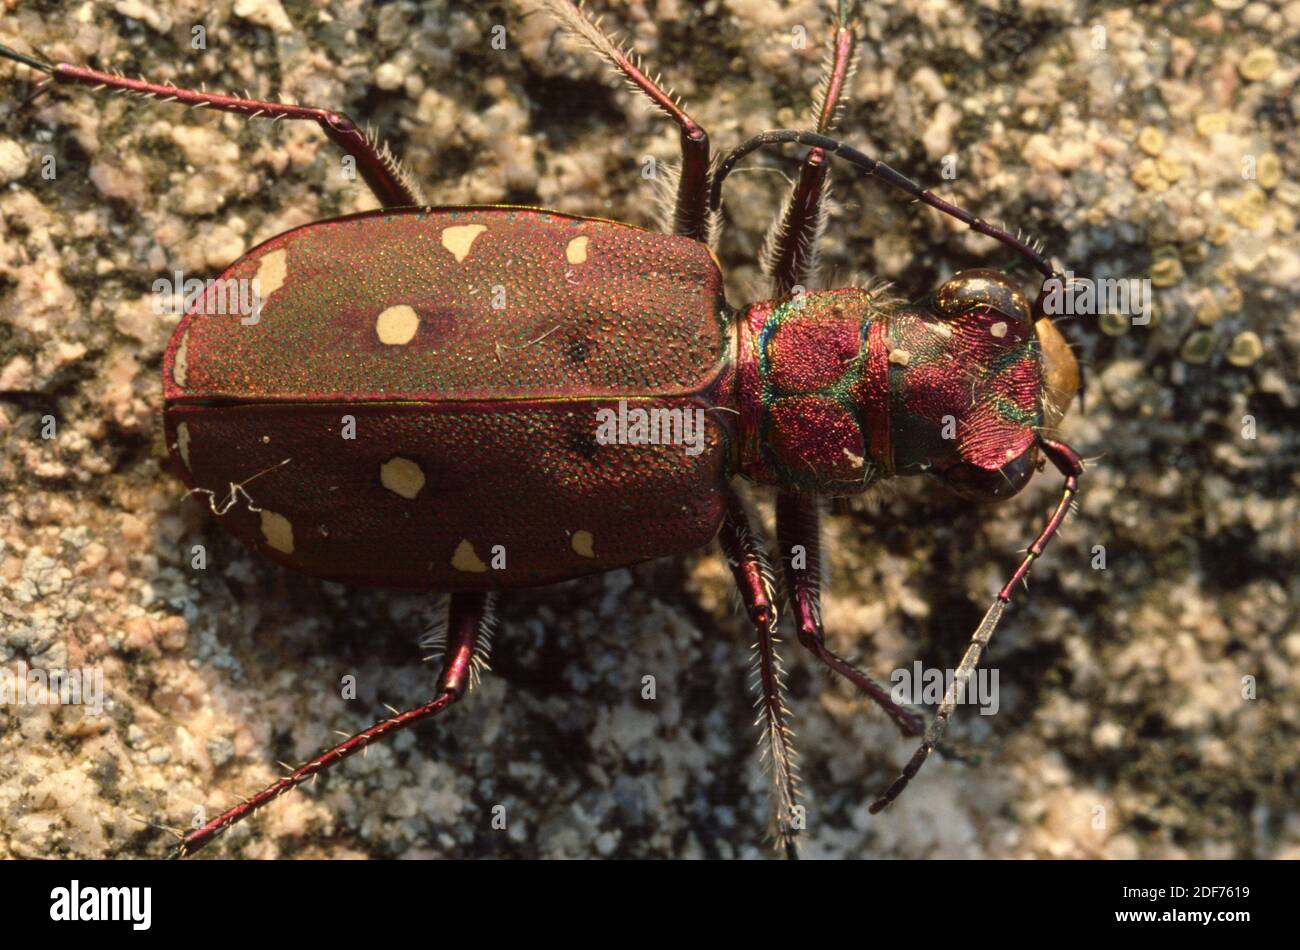 Tiger beetle (Cicindela maroccana) is a ground beetle native to western Mediterranean Basin. Stock Photo